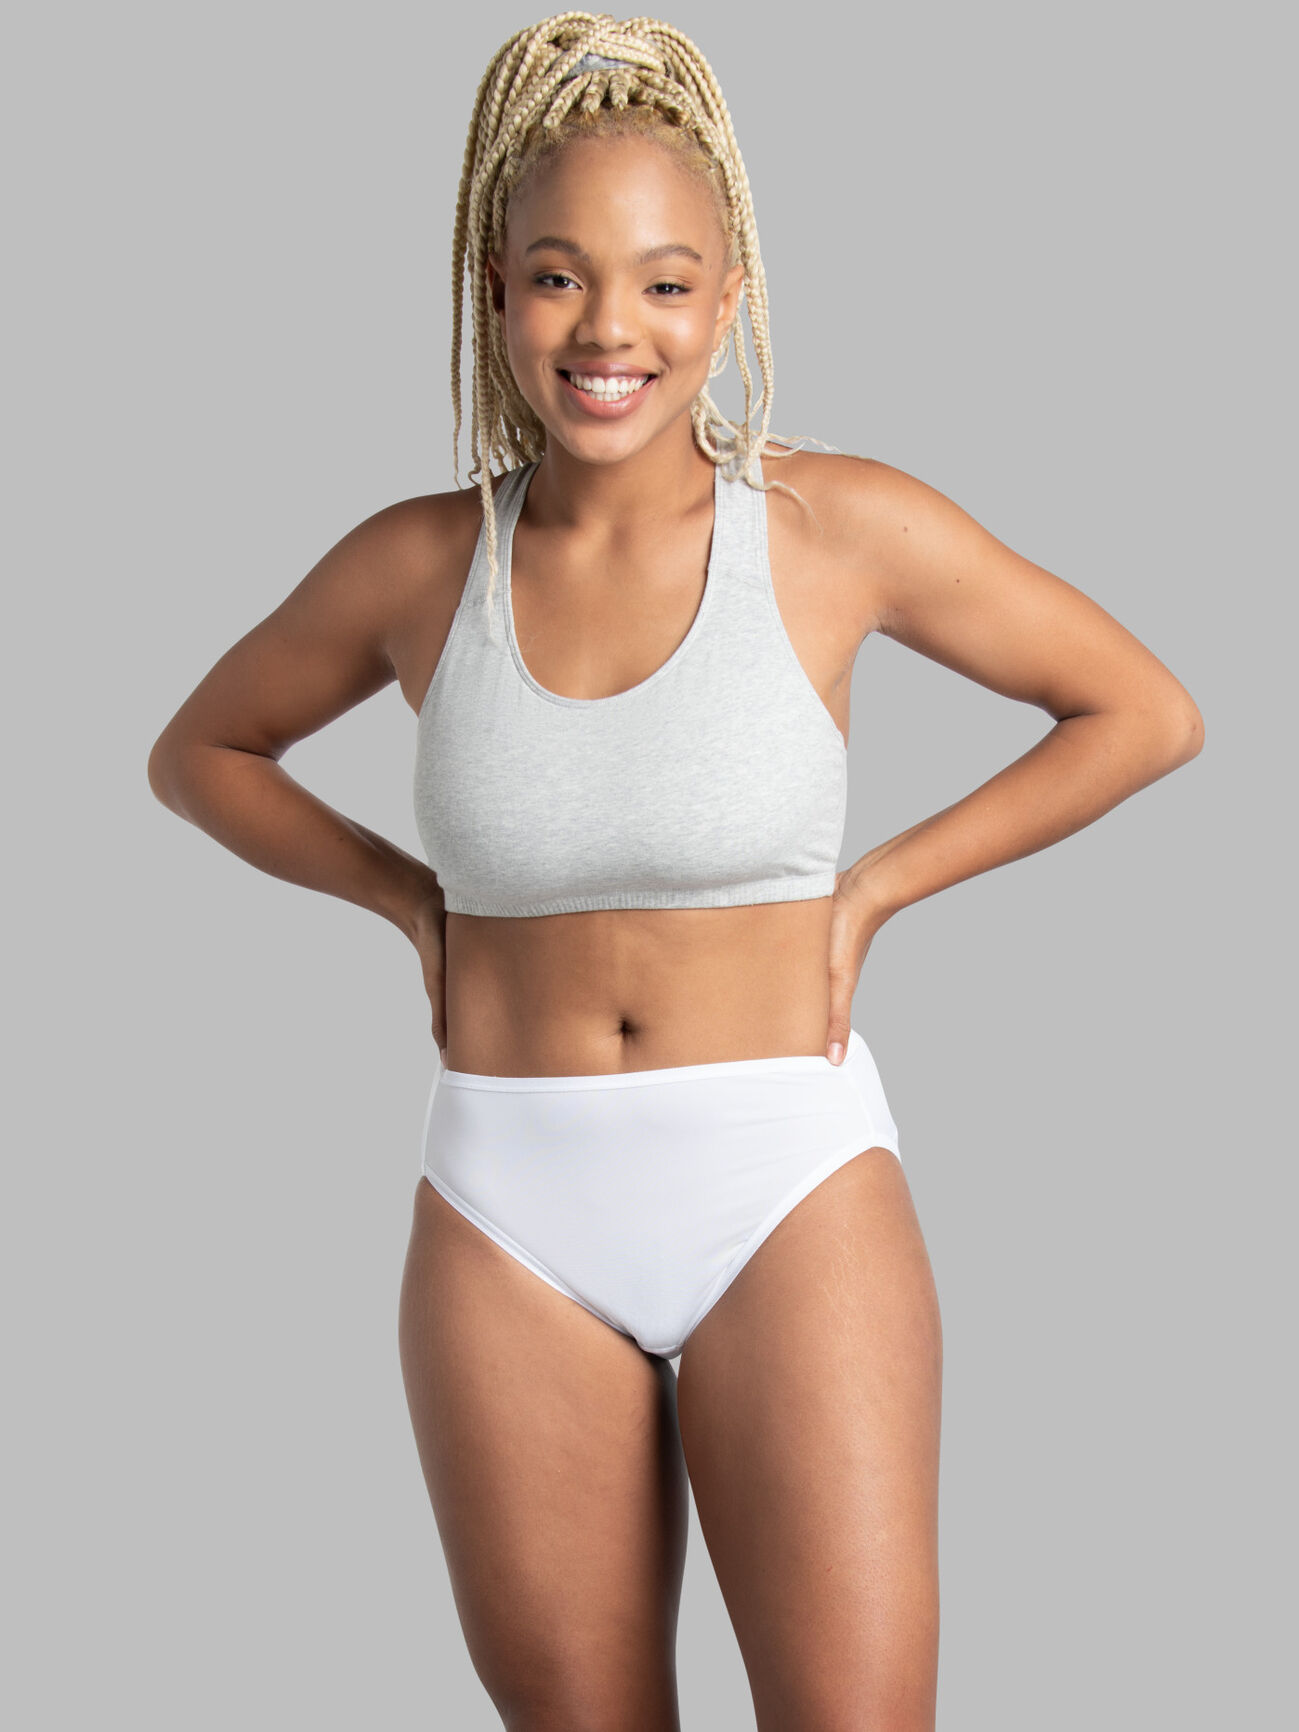 Lucky Brand Women's Underwear - 10 Pack Microfiber Bikini Panties